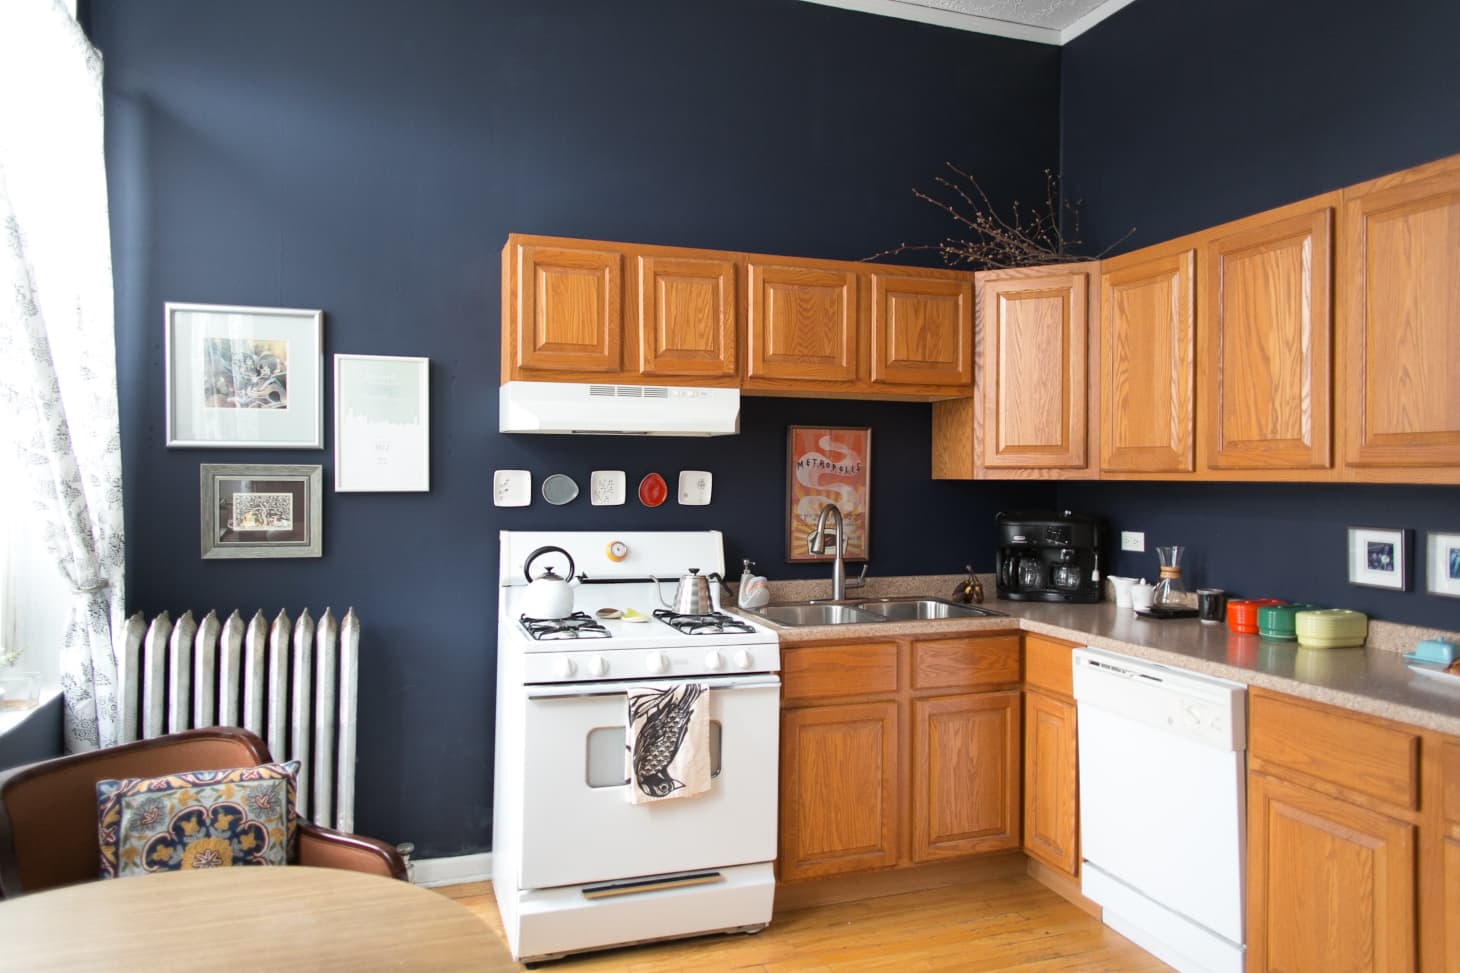 Rental Kitchen Decor Ideas Oak Wood Finish Cabinets Apartment